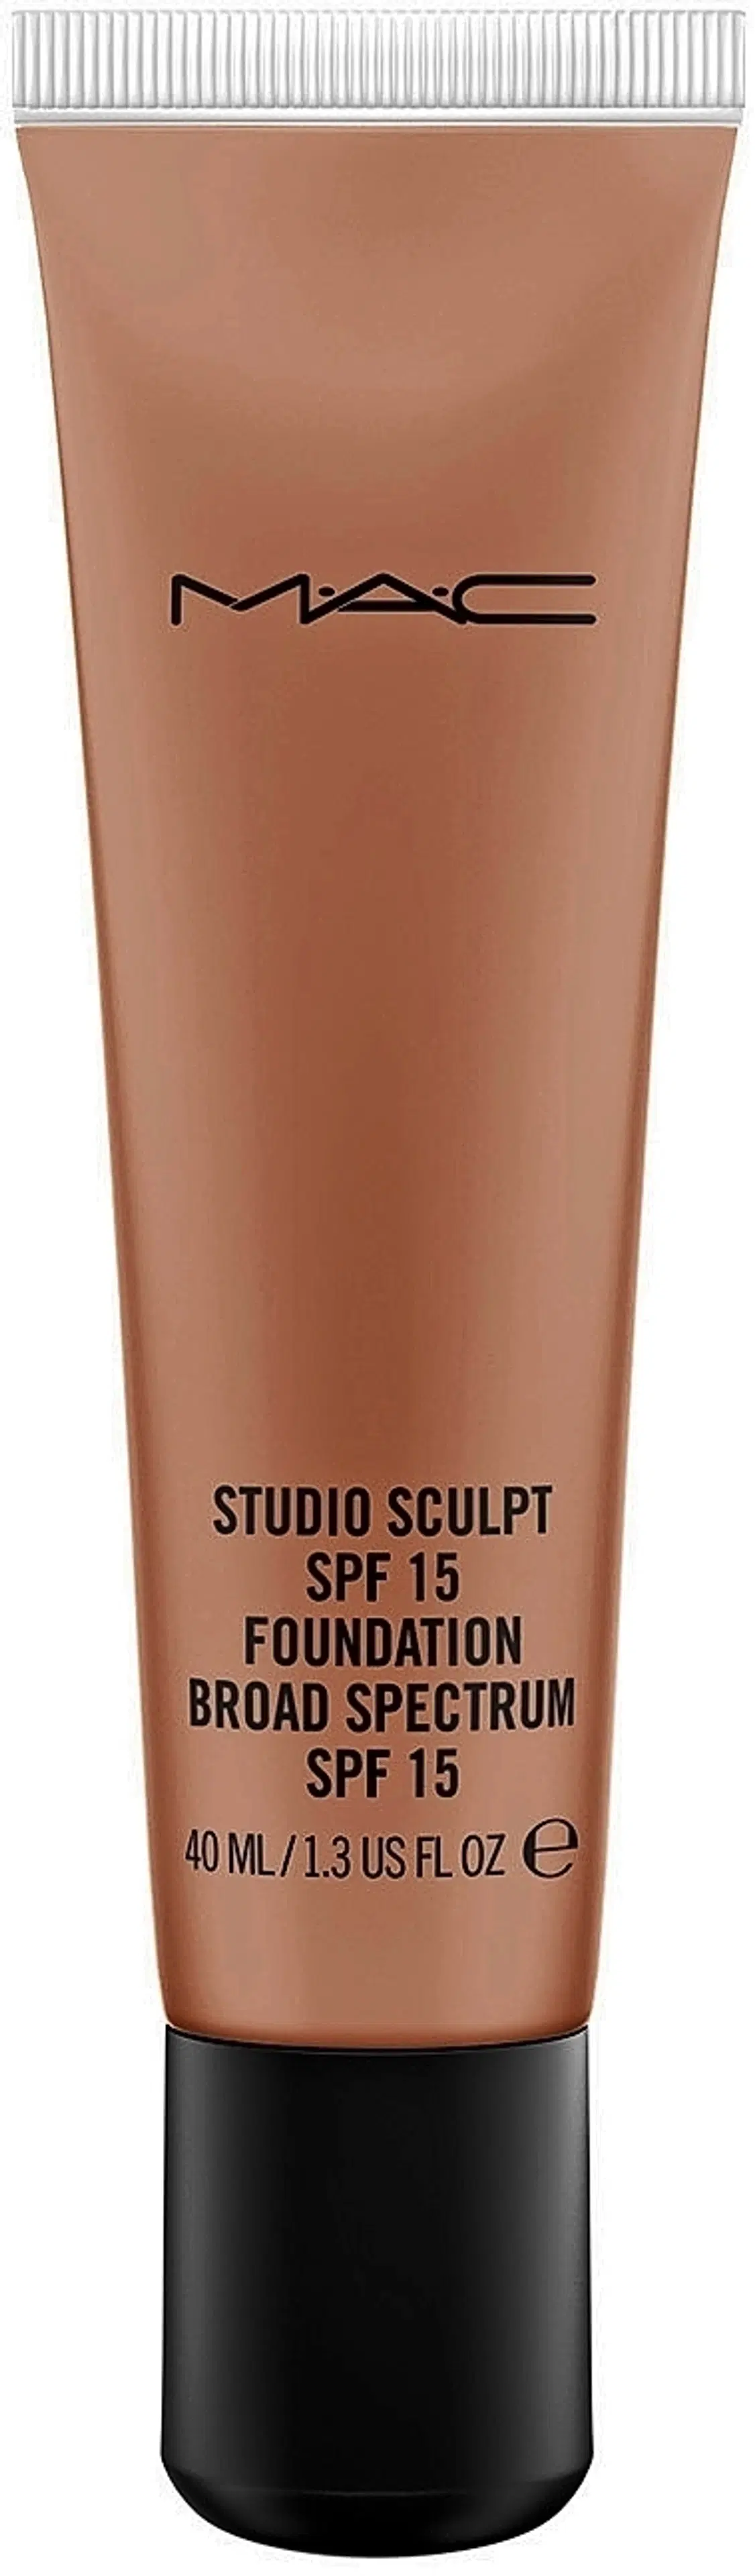 MAC Studio Sculpt SPF 15 Foundation meikkivoide 40 ml